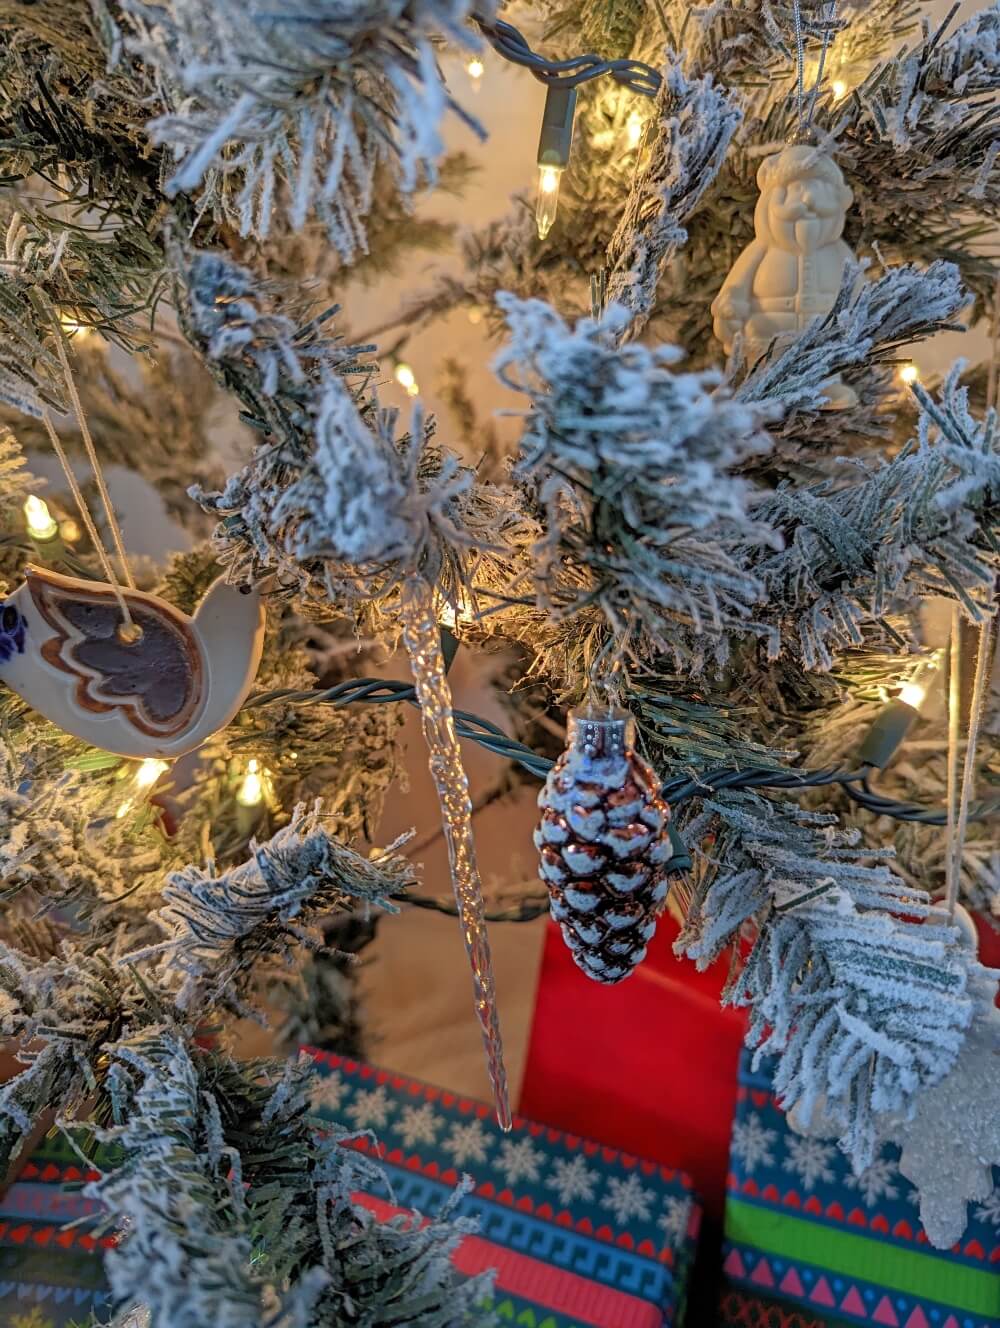 Scandinavian-Themed Christmas Tree